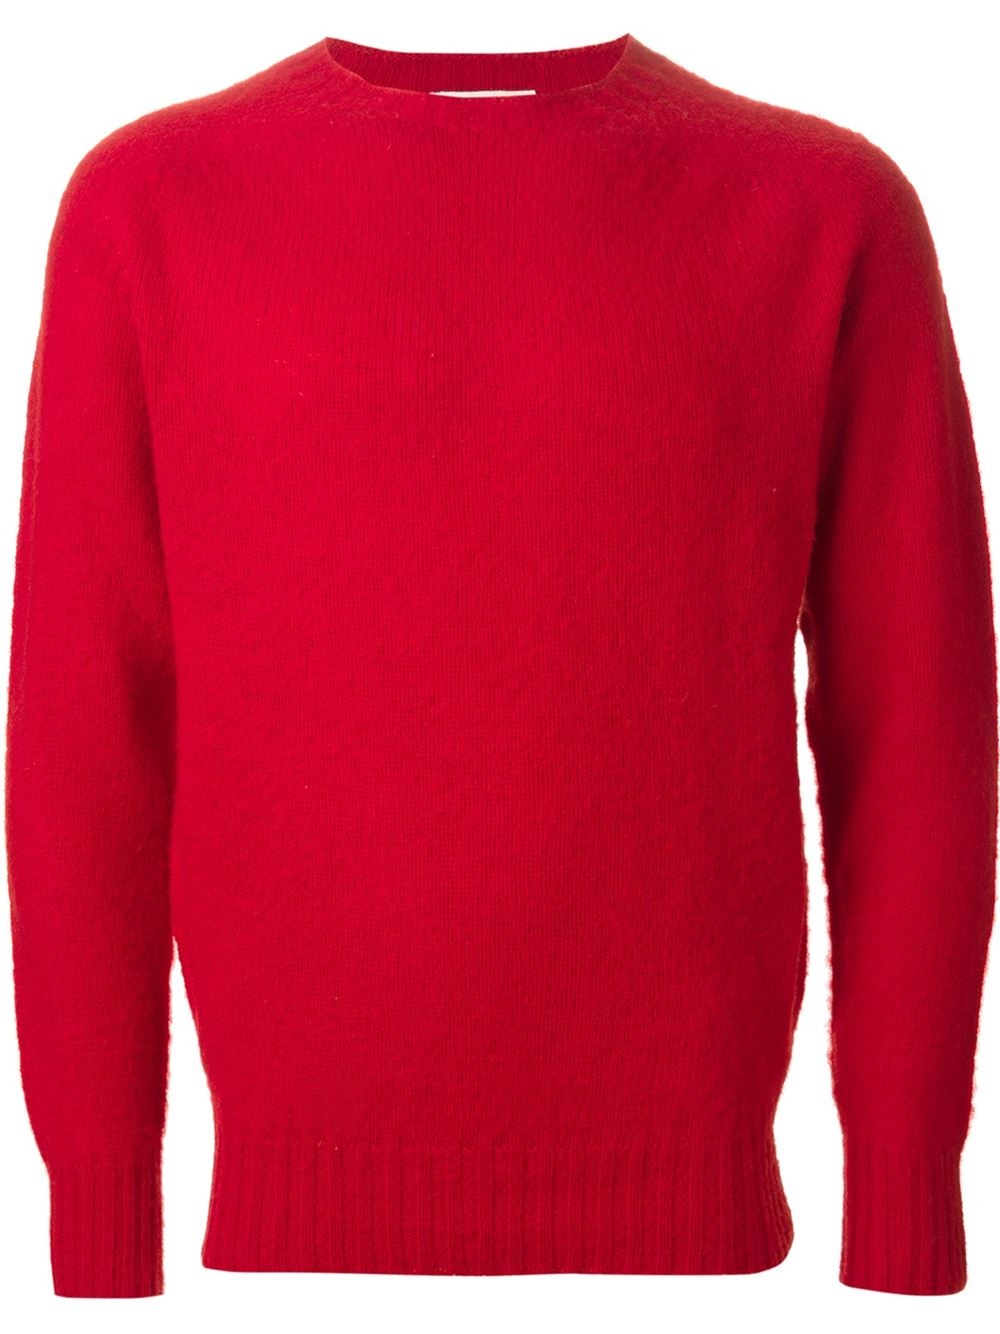 Lyst - YMC Crew Neck Sweater in Red for Men